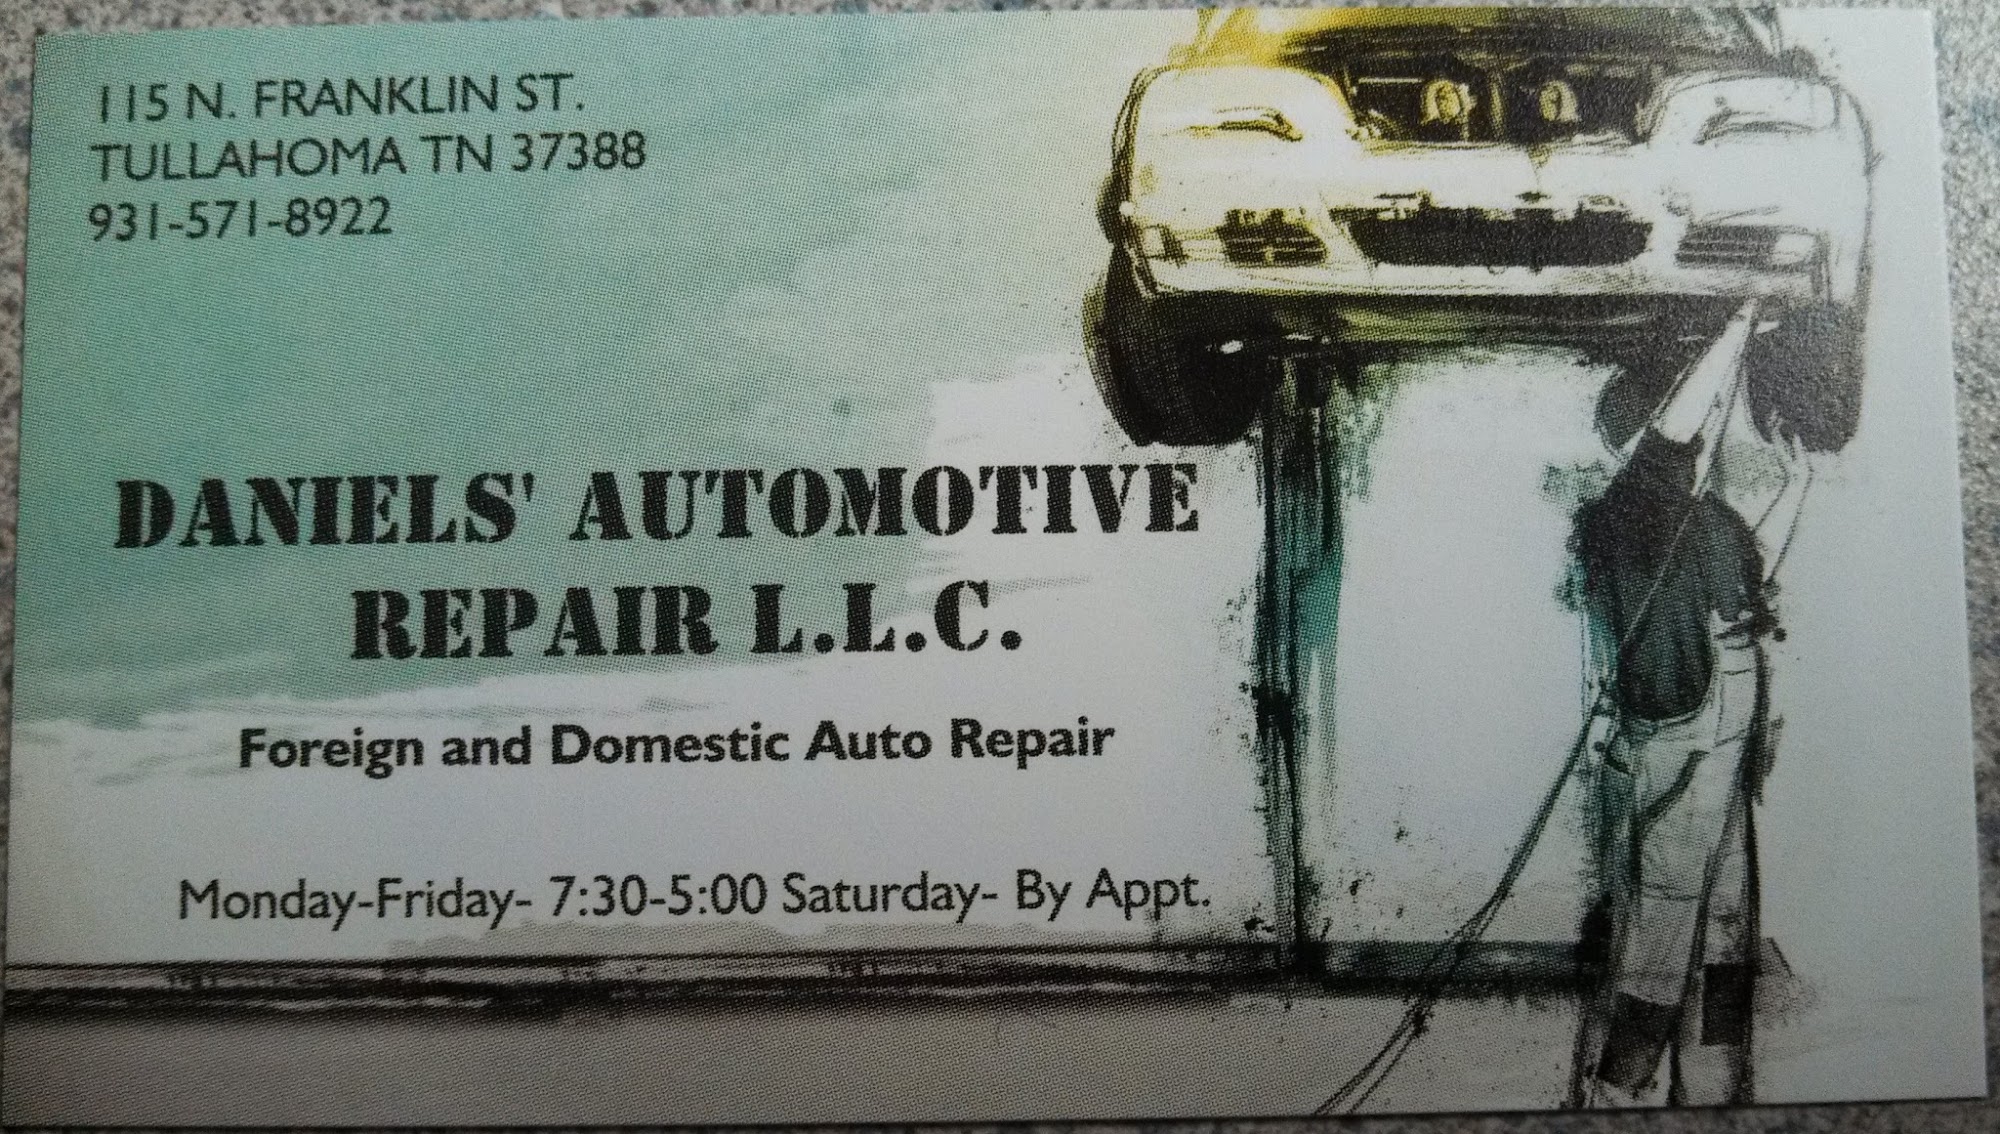 Daniels' Automotive Repair LLC